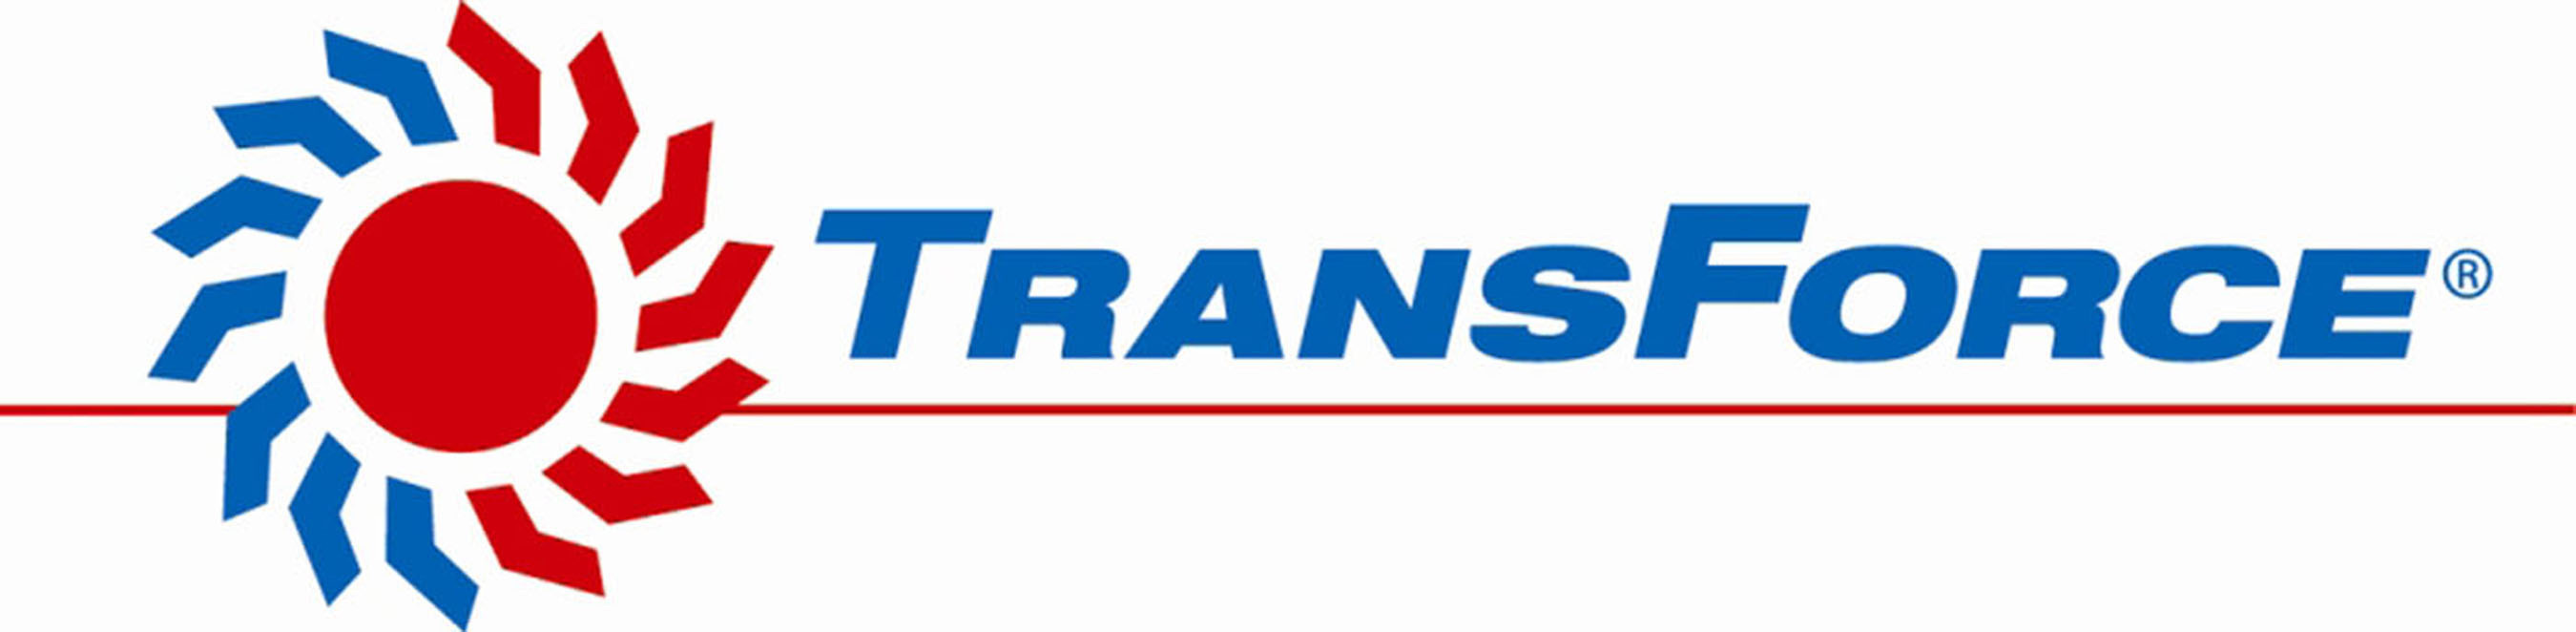 TransForce Logo.